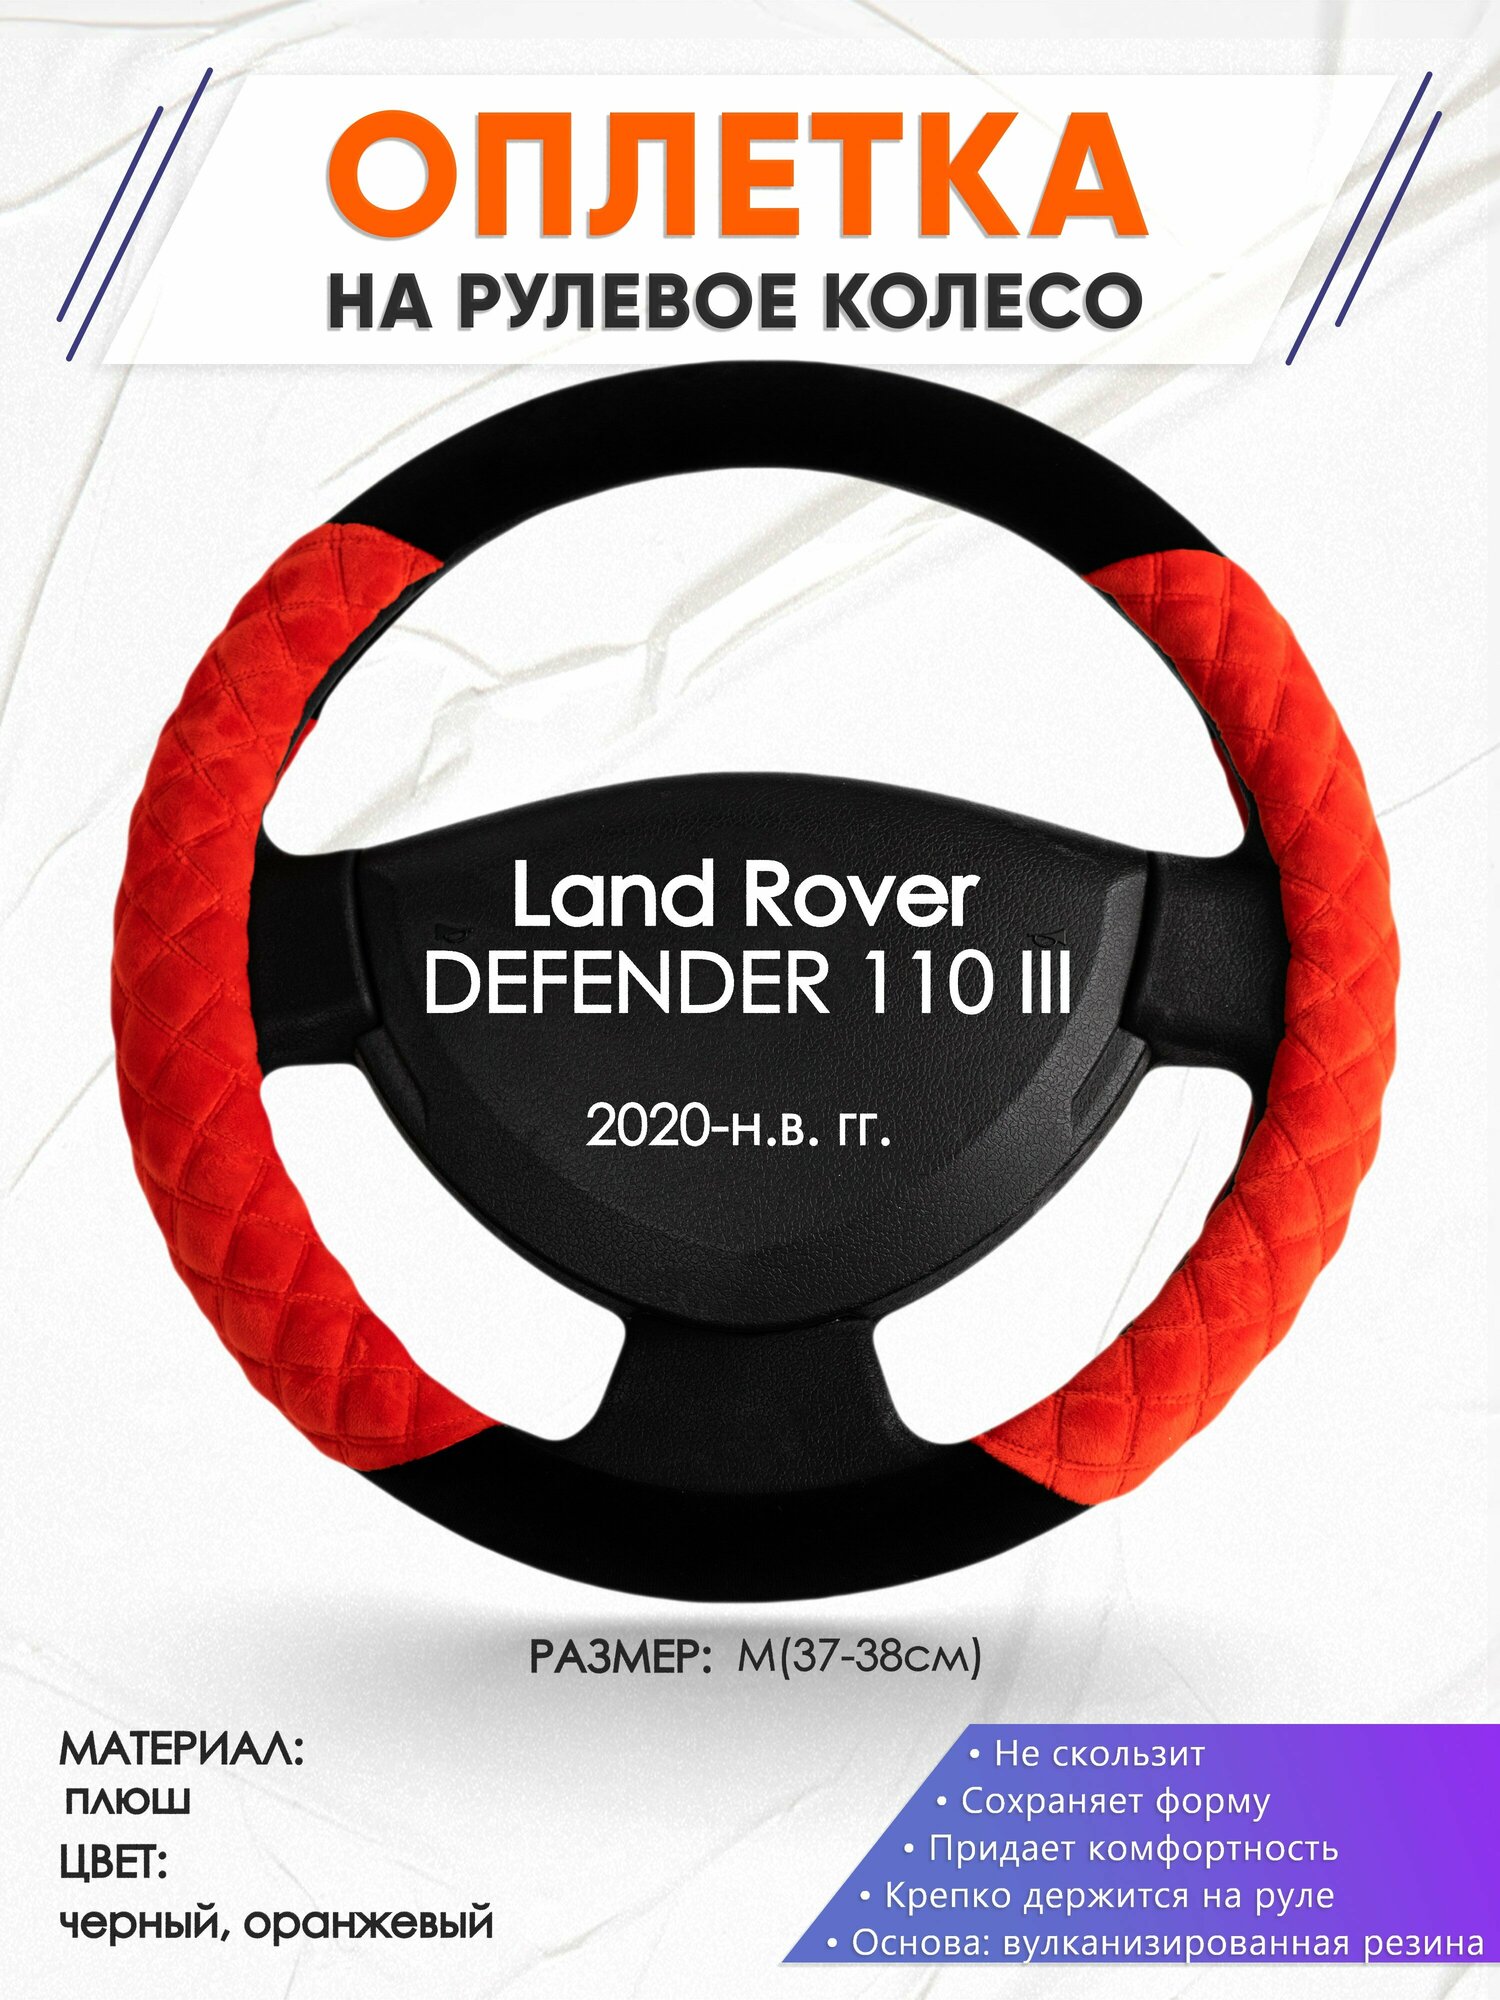 Оплетка наруль для Land Rover DEFENDER 110 3(Ленд Ровер Дефендер 110) 2020-н. в. годов выпуска, размер M(37-38см), Замша 37